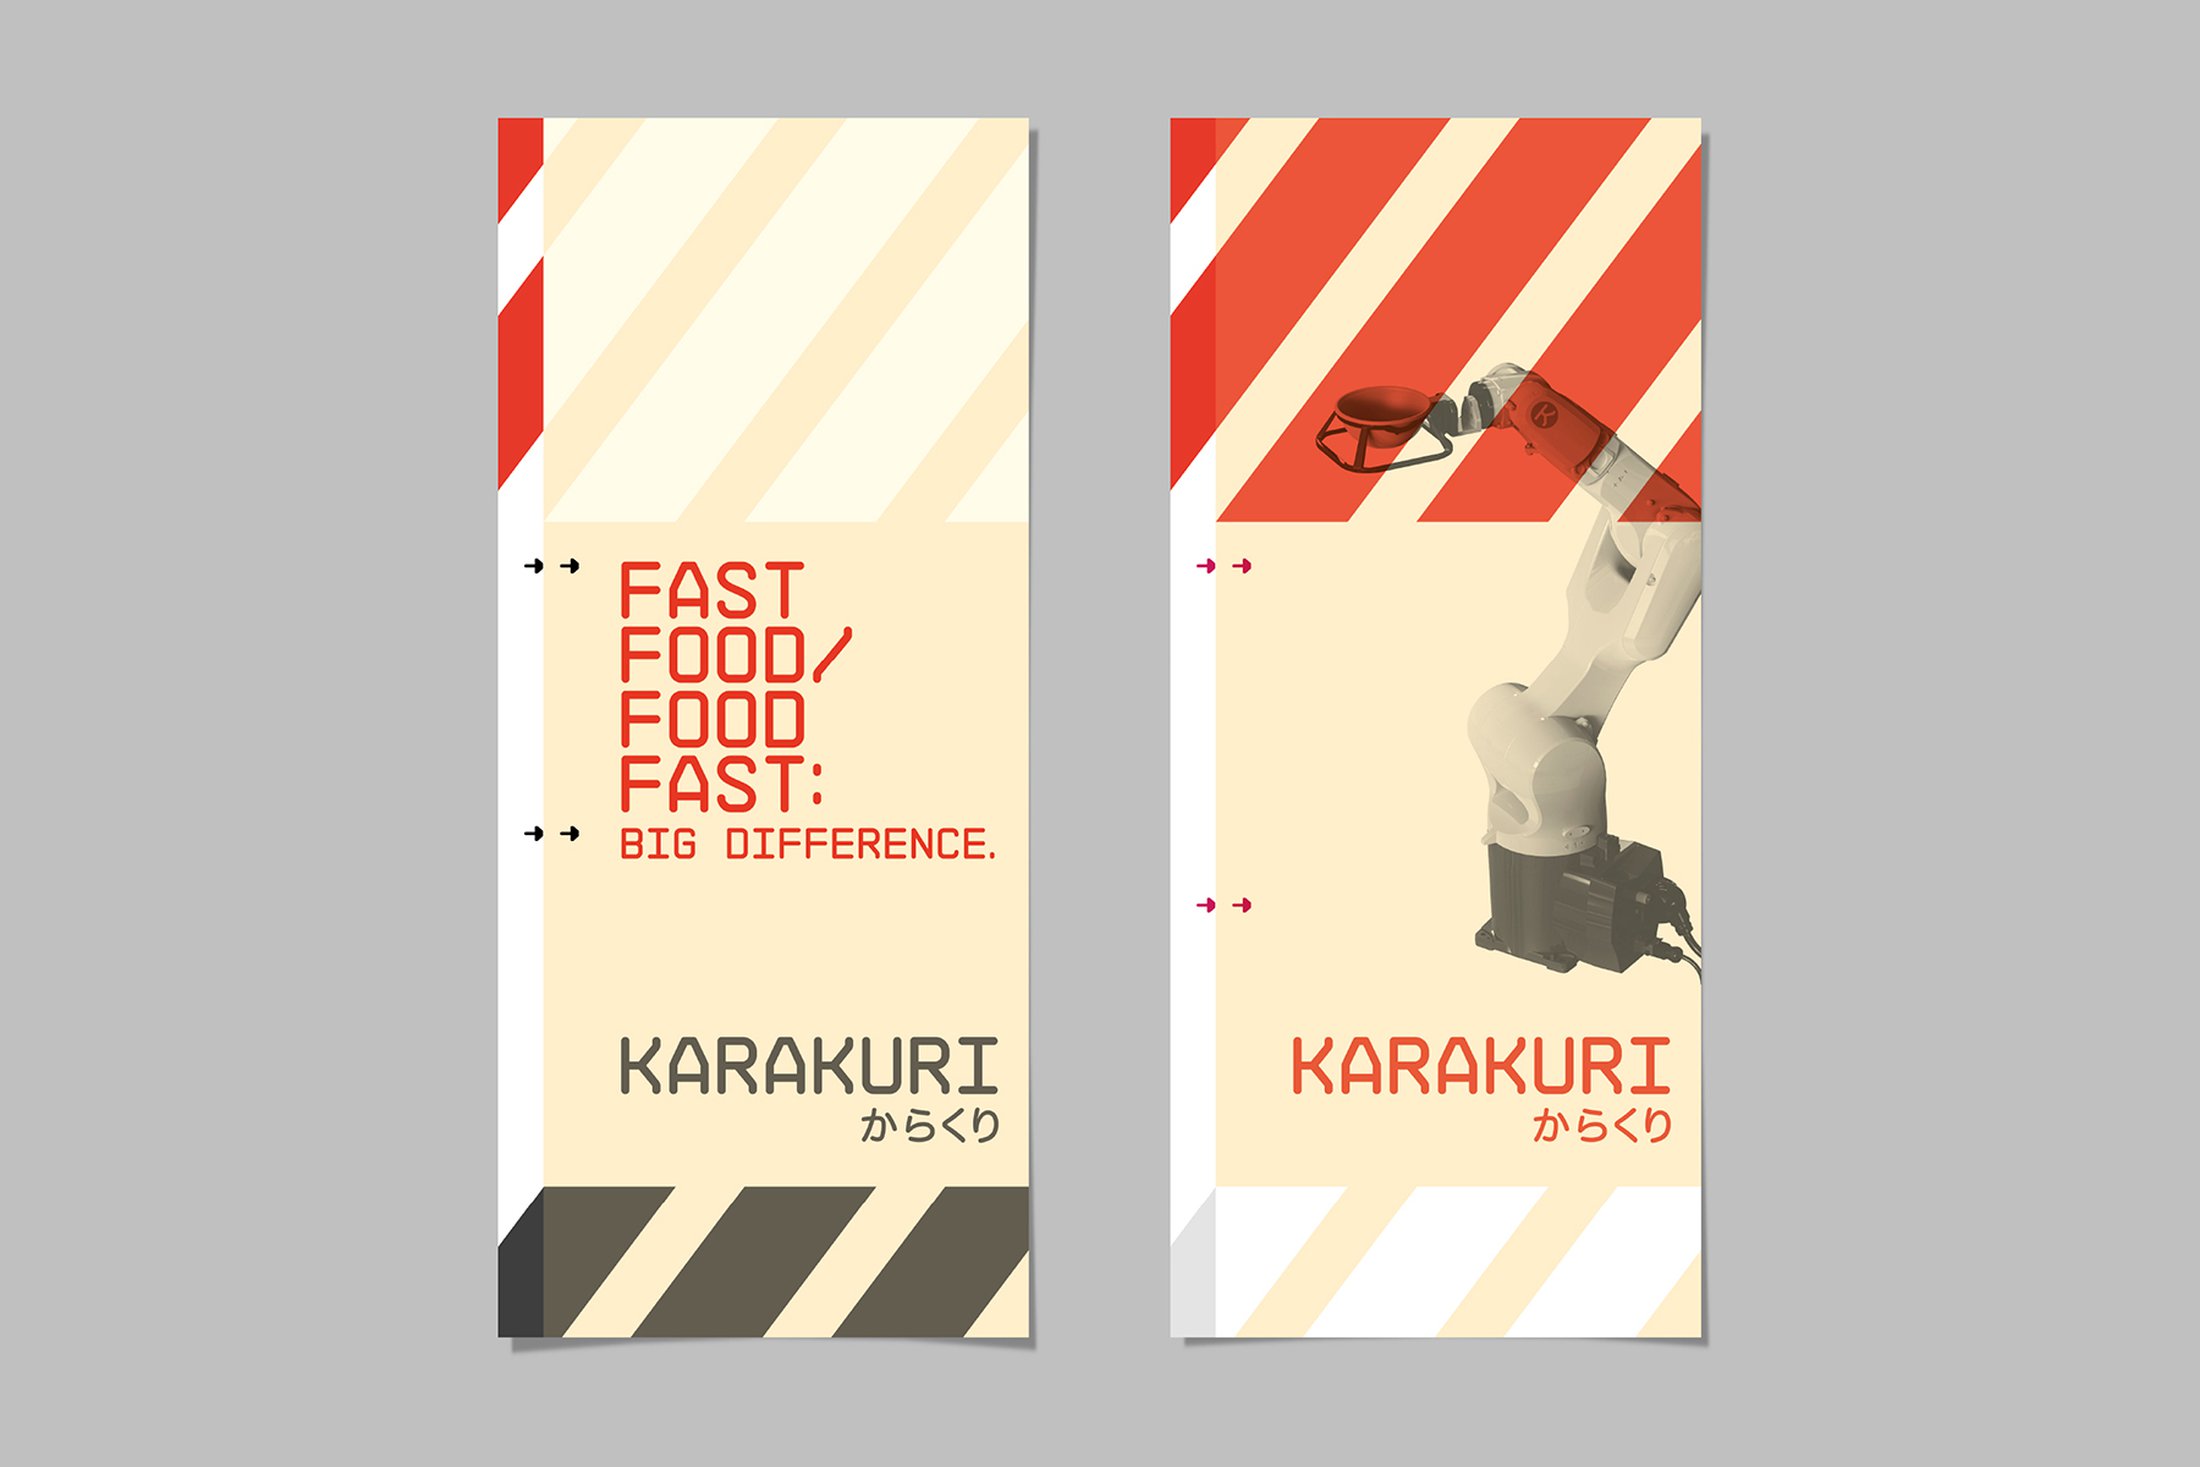 paul_belford_ltd_karakuri_posters_food_fast.jpg